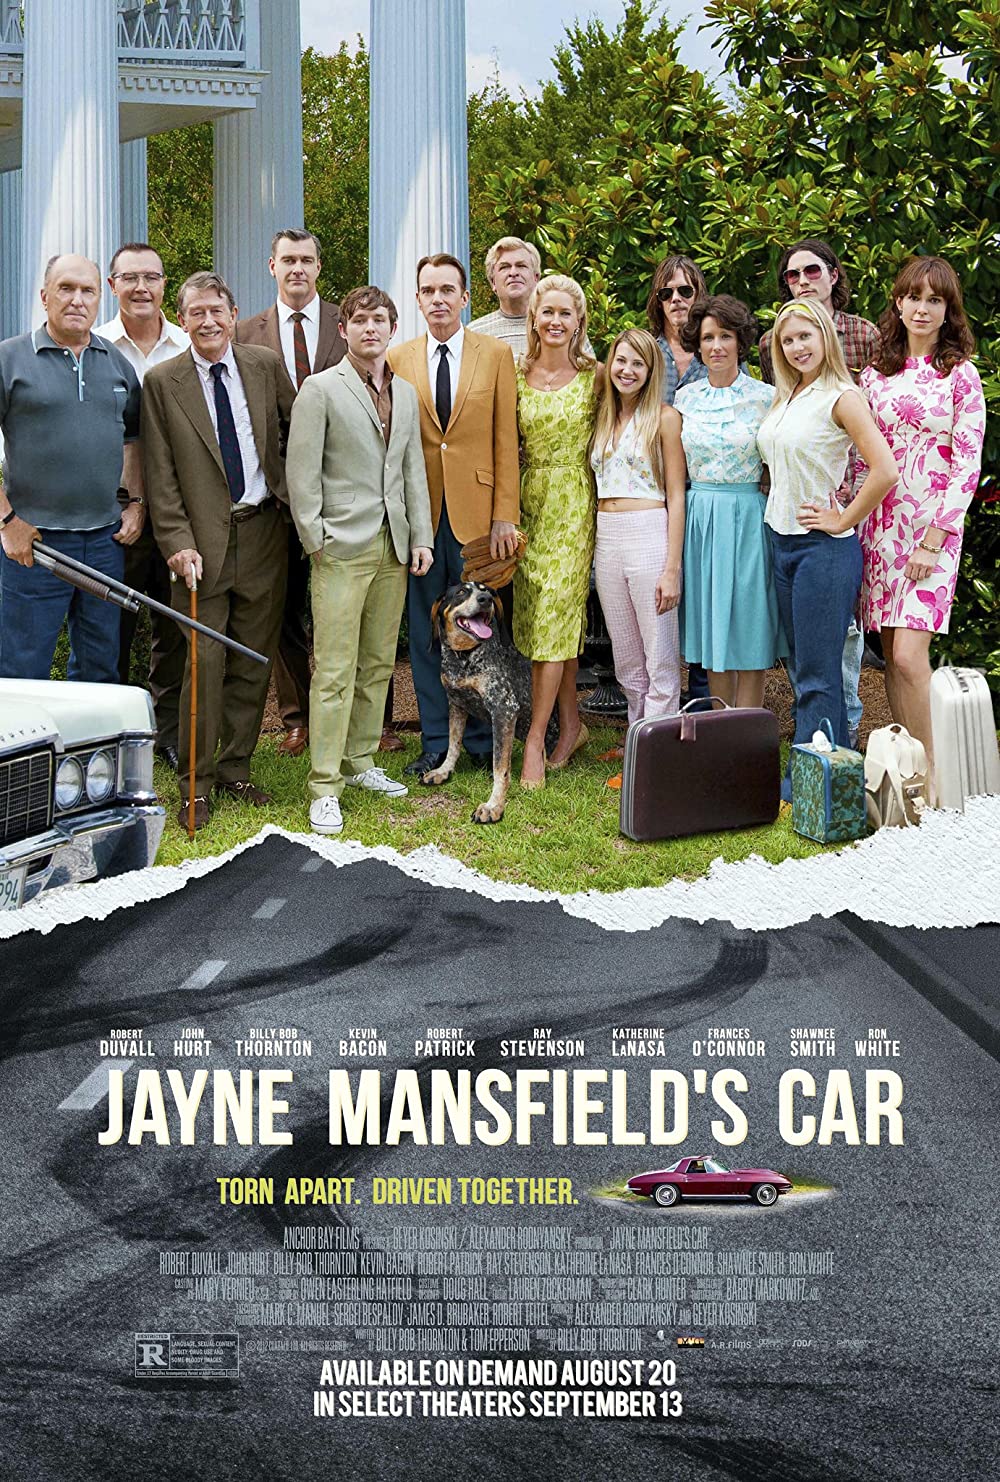 Jayne Mansfield's Car (2012)